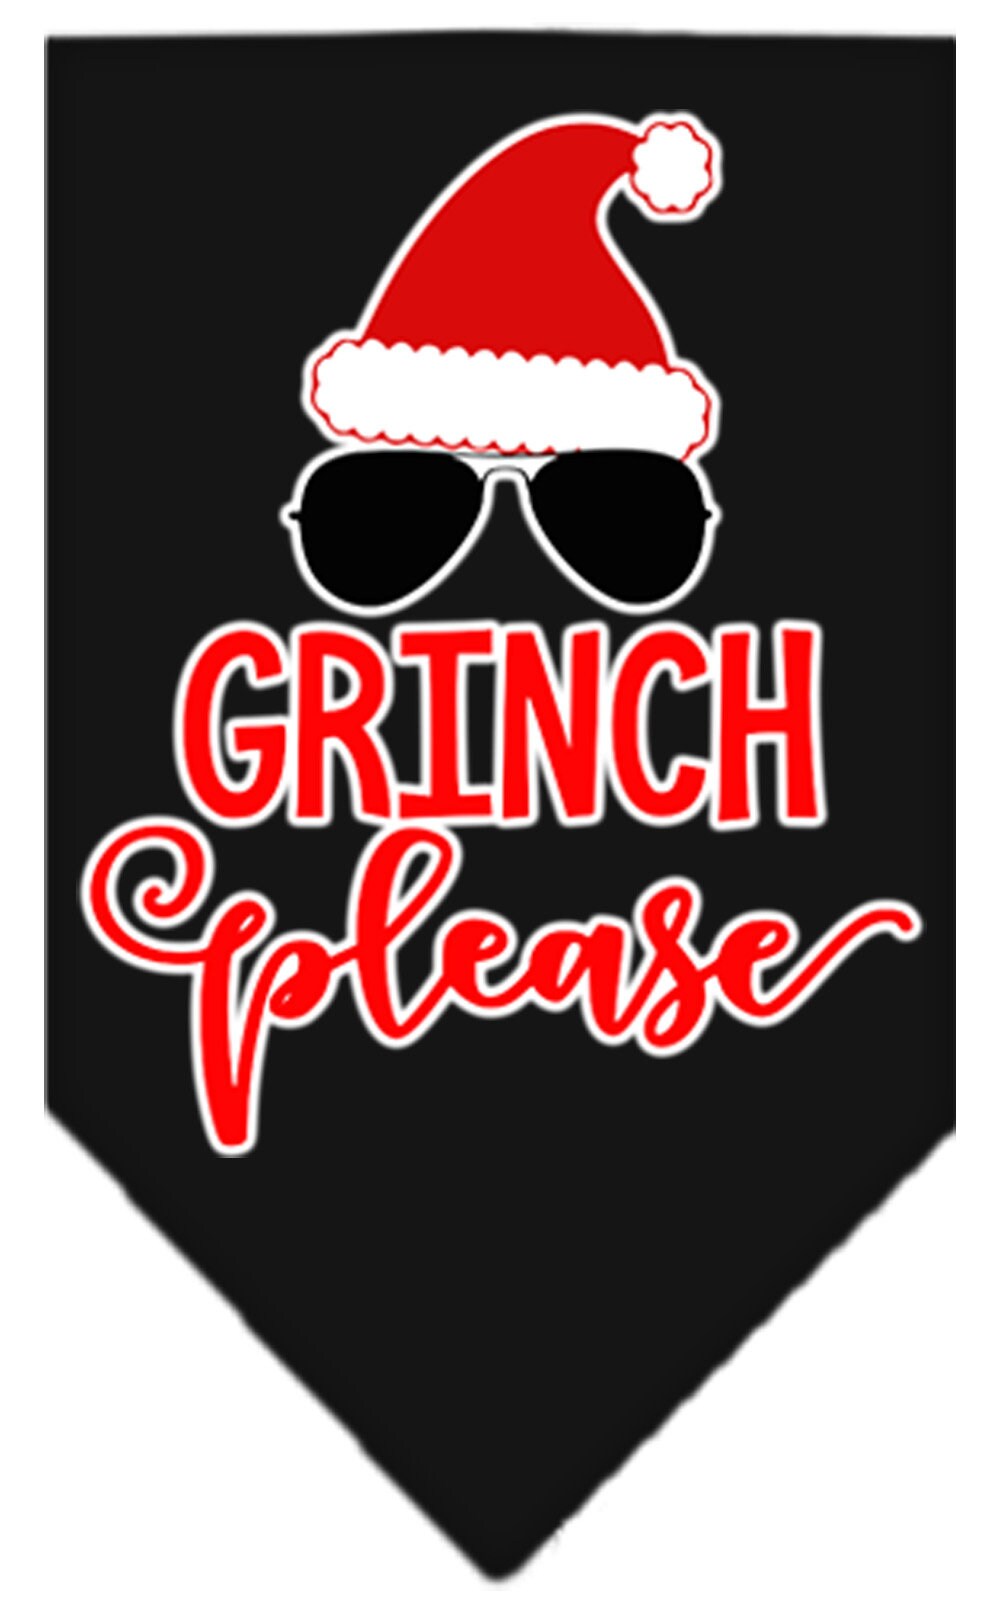 Christmas Pet and Dog Bandana Screen Printed, "Grinch Please"